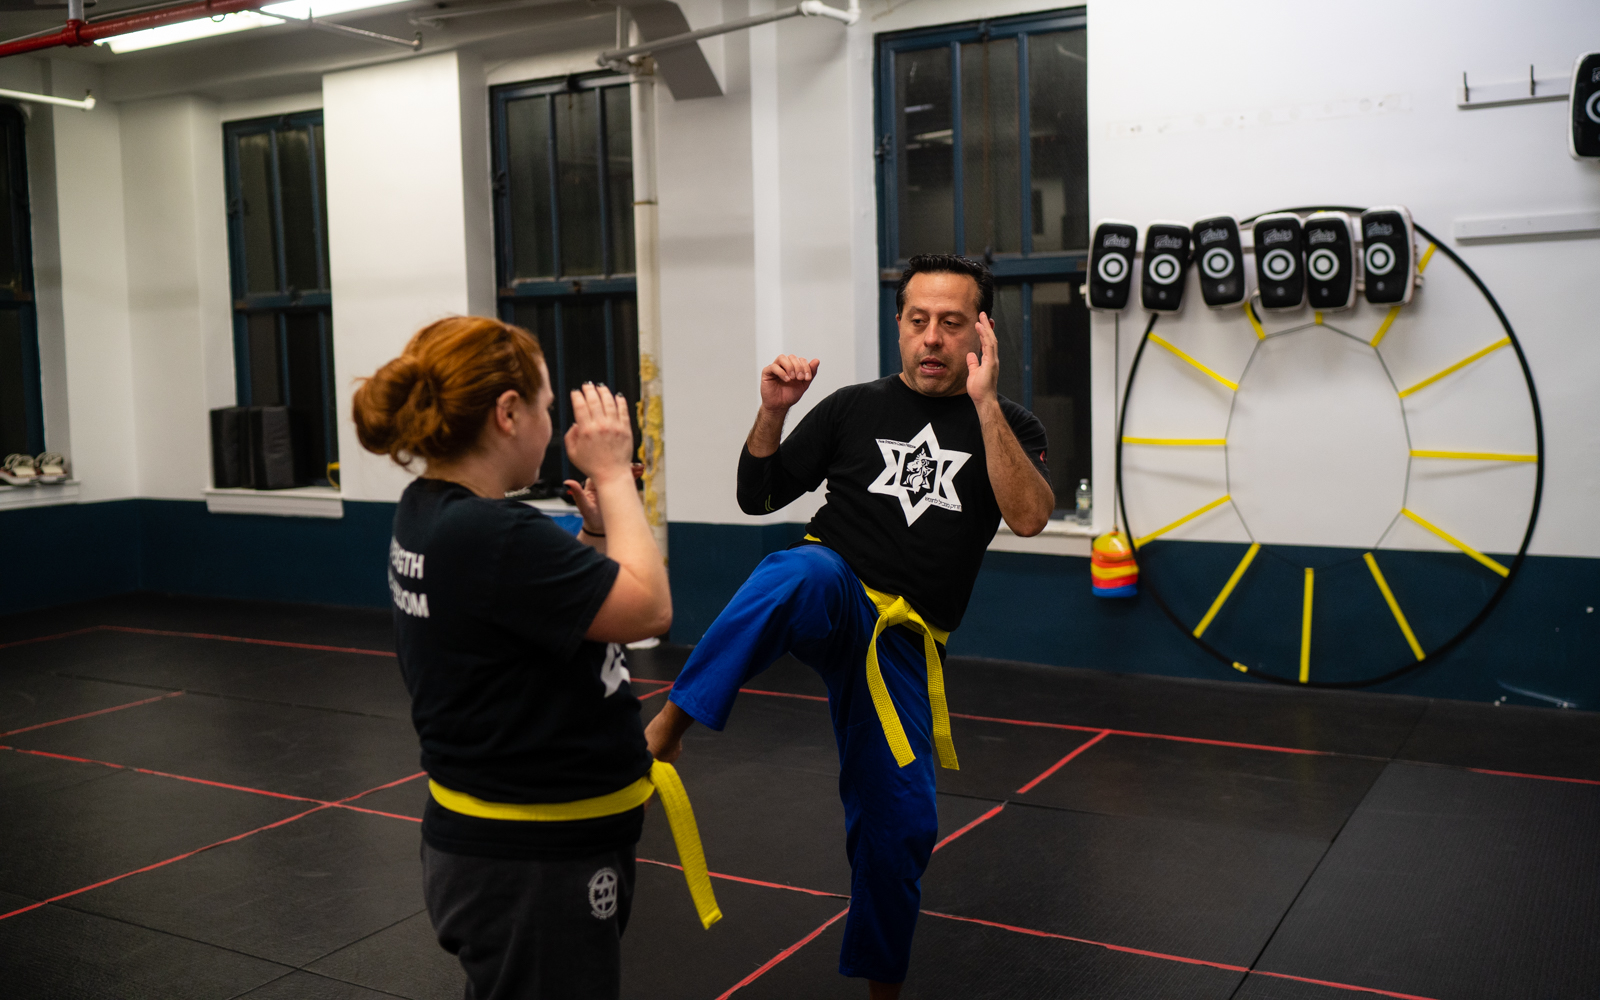 Students train Krav Maga through the Legion self-defense program in New York City. (Luke Tress/Times of Israel)